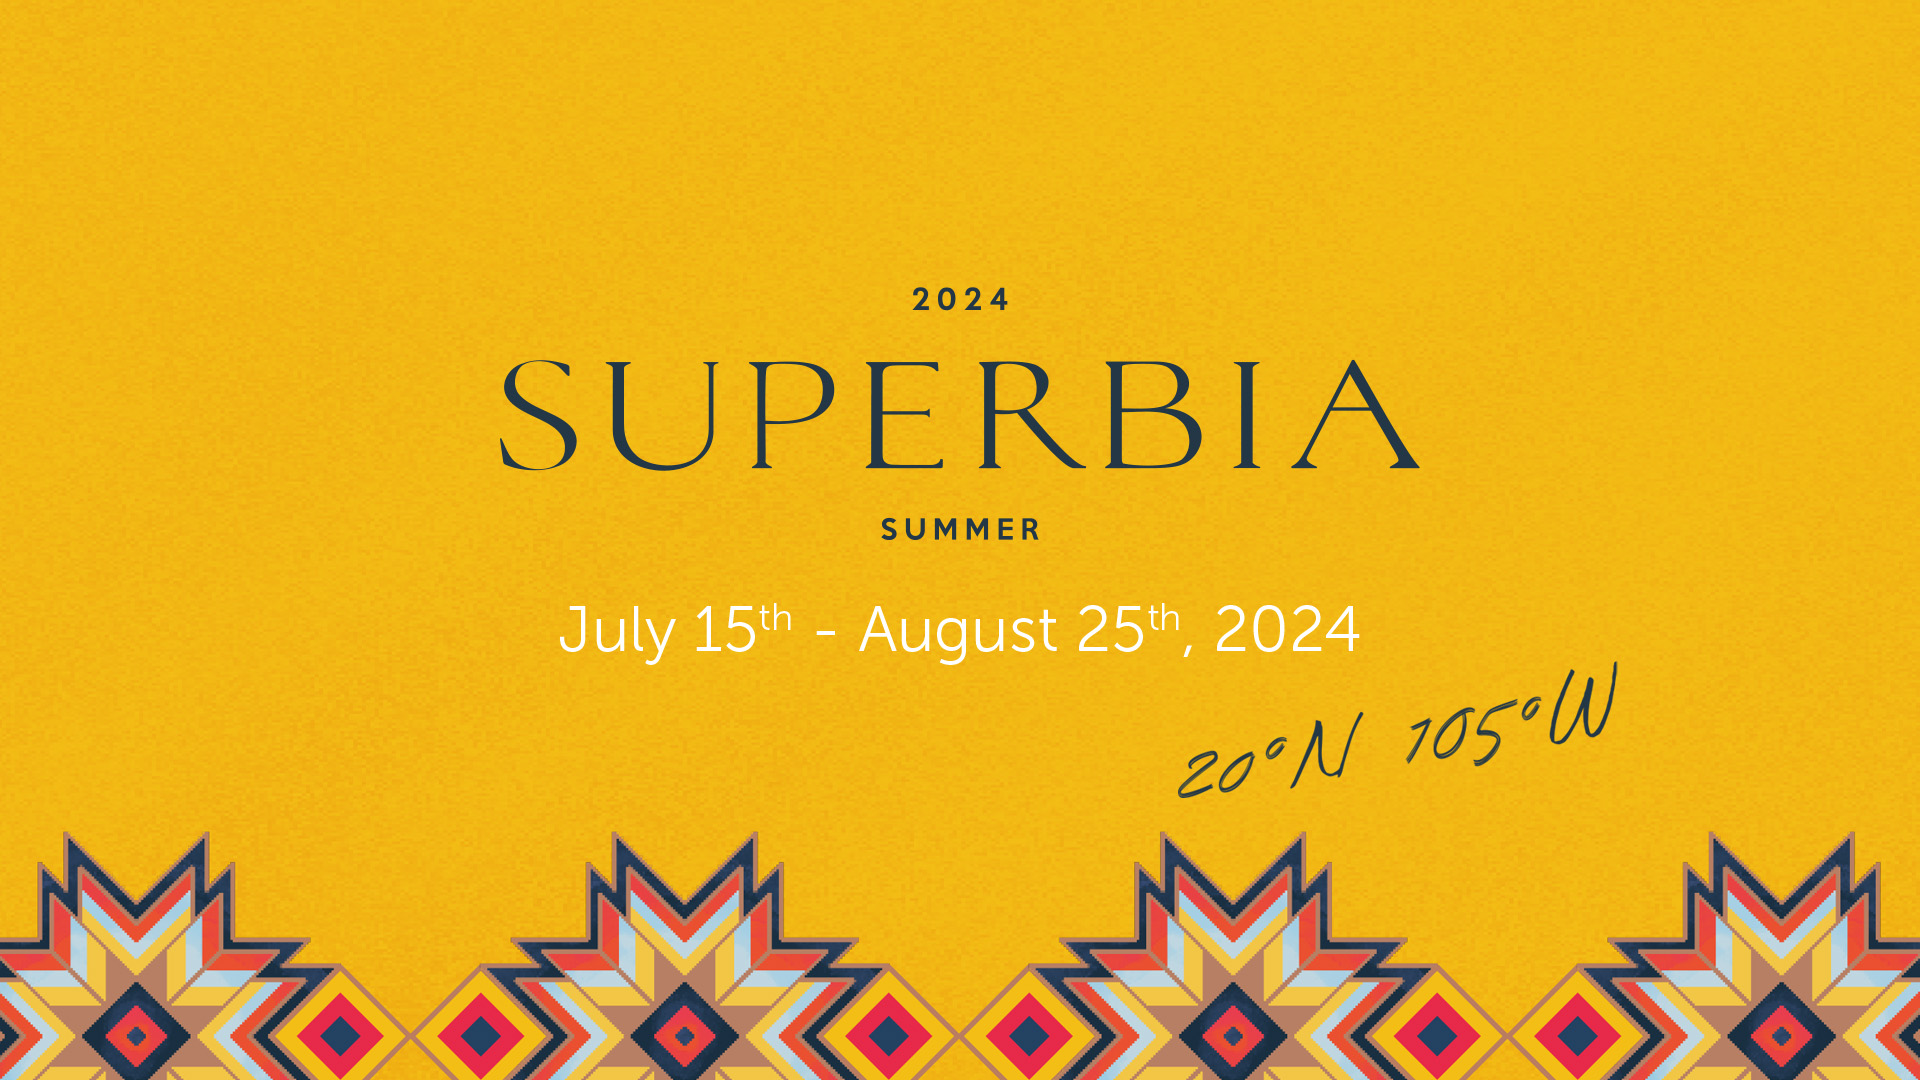 Superbia Summer 2024